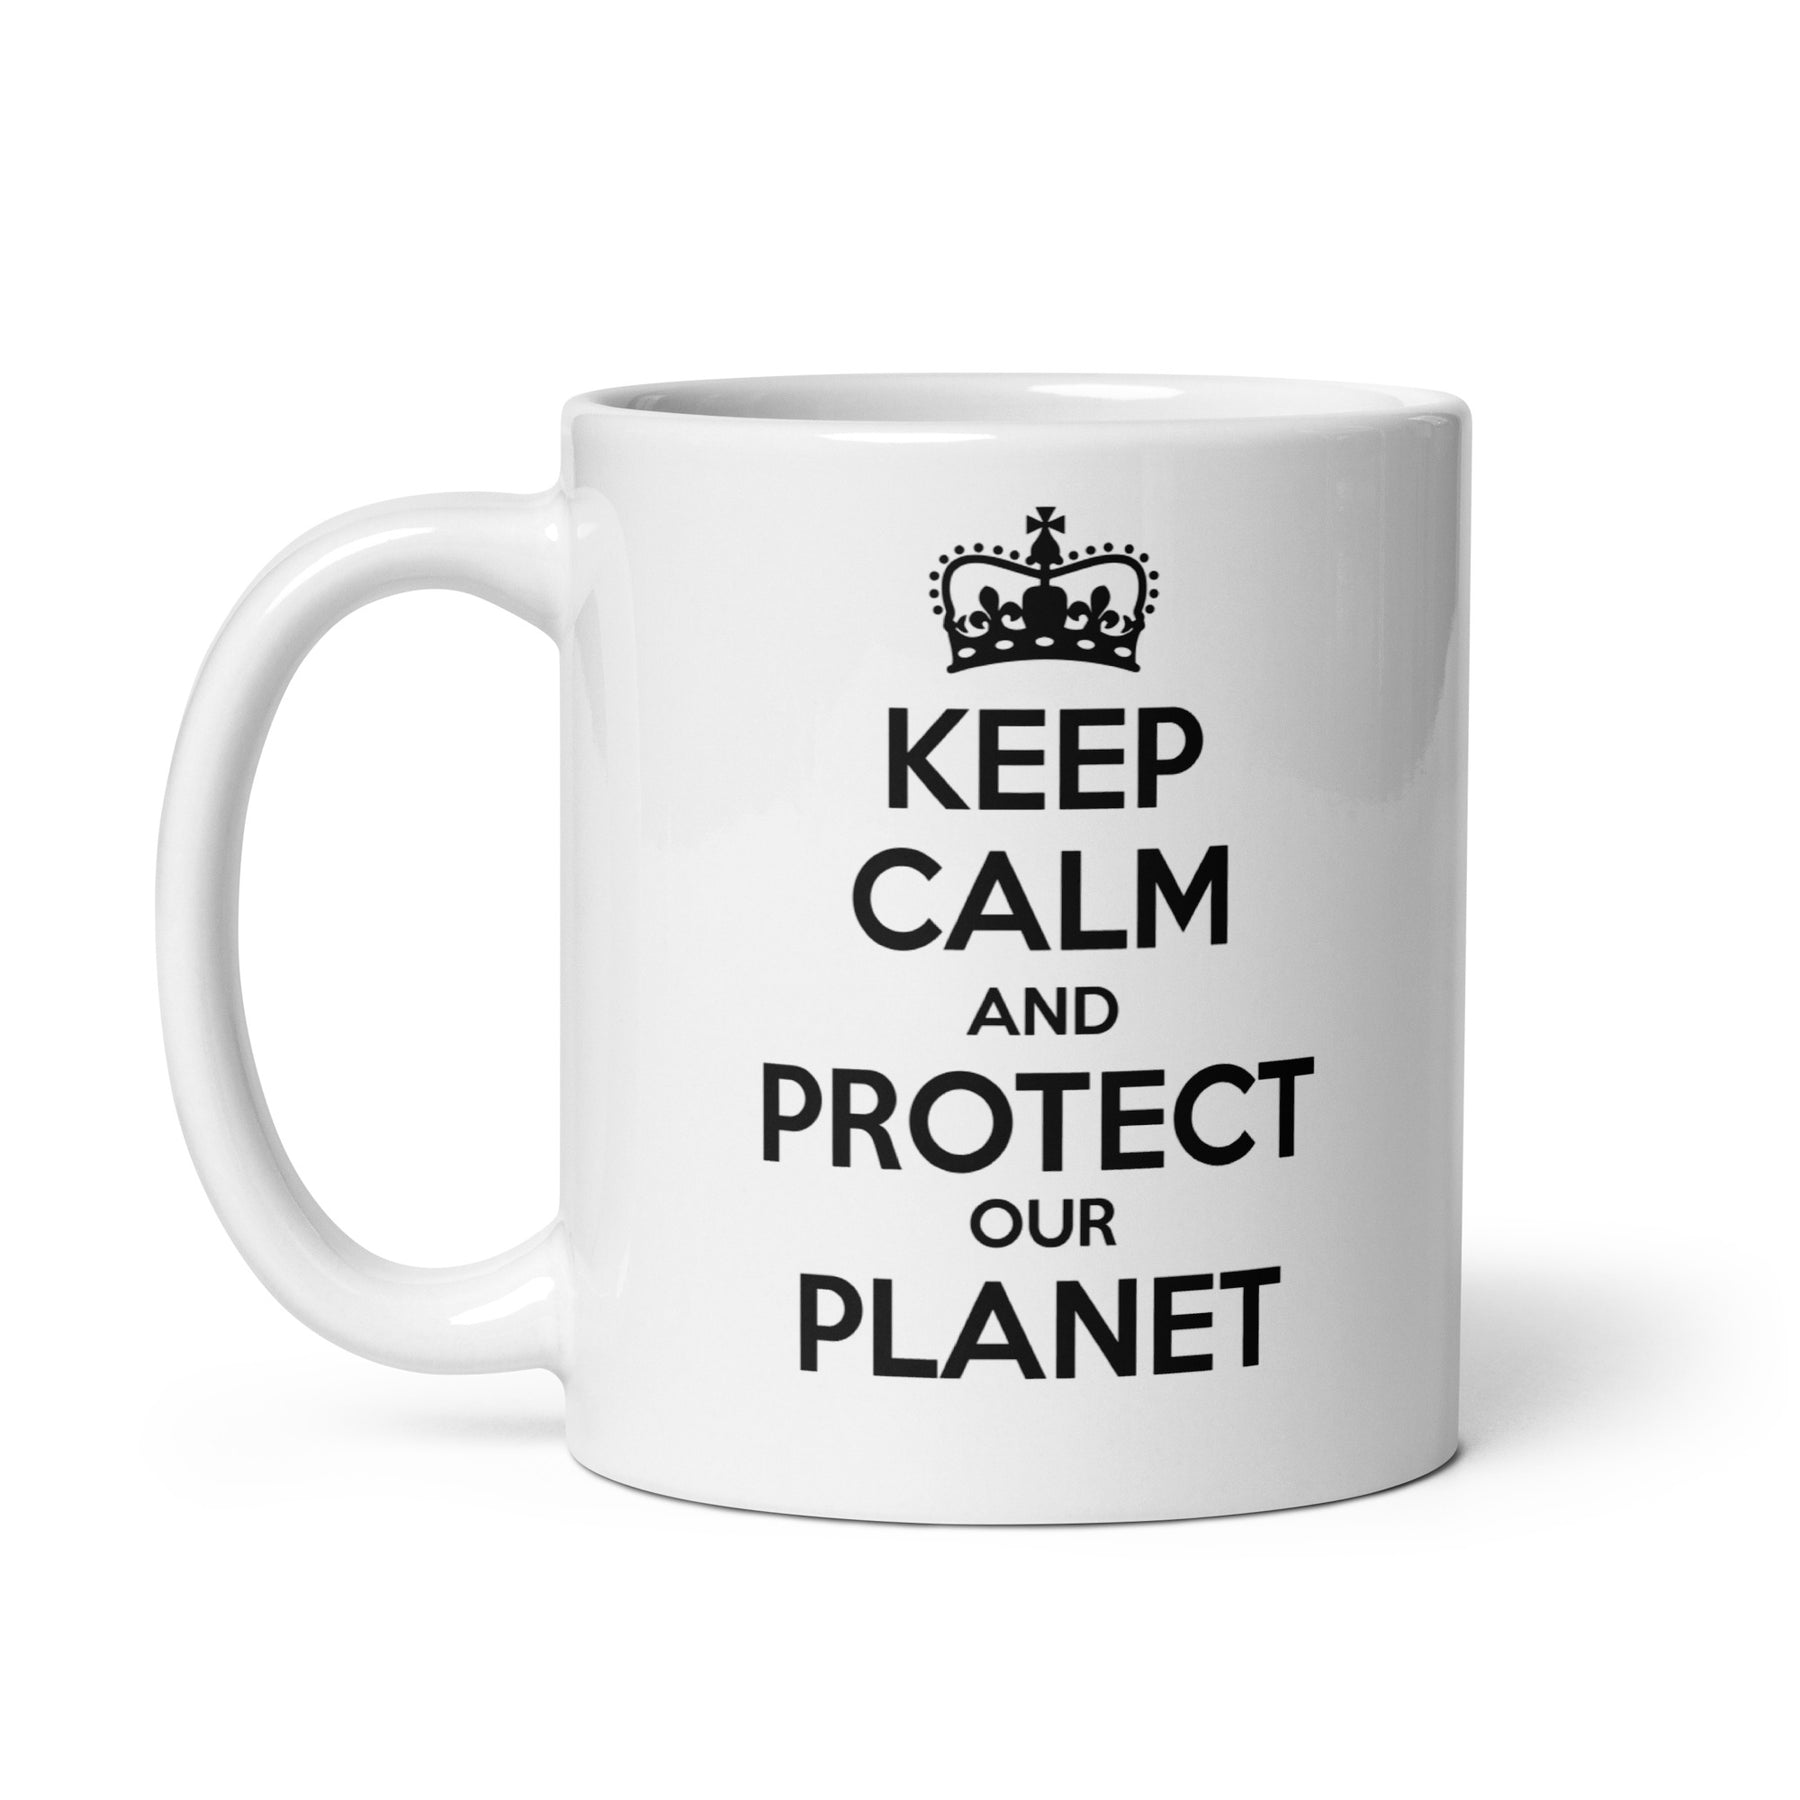 KEEP CALM PROTECT THE PLANET White glossy mug